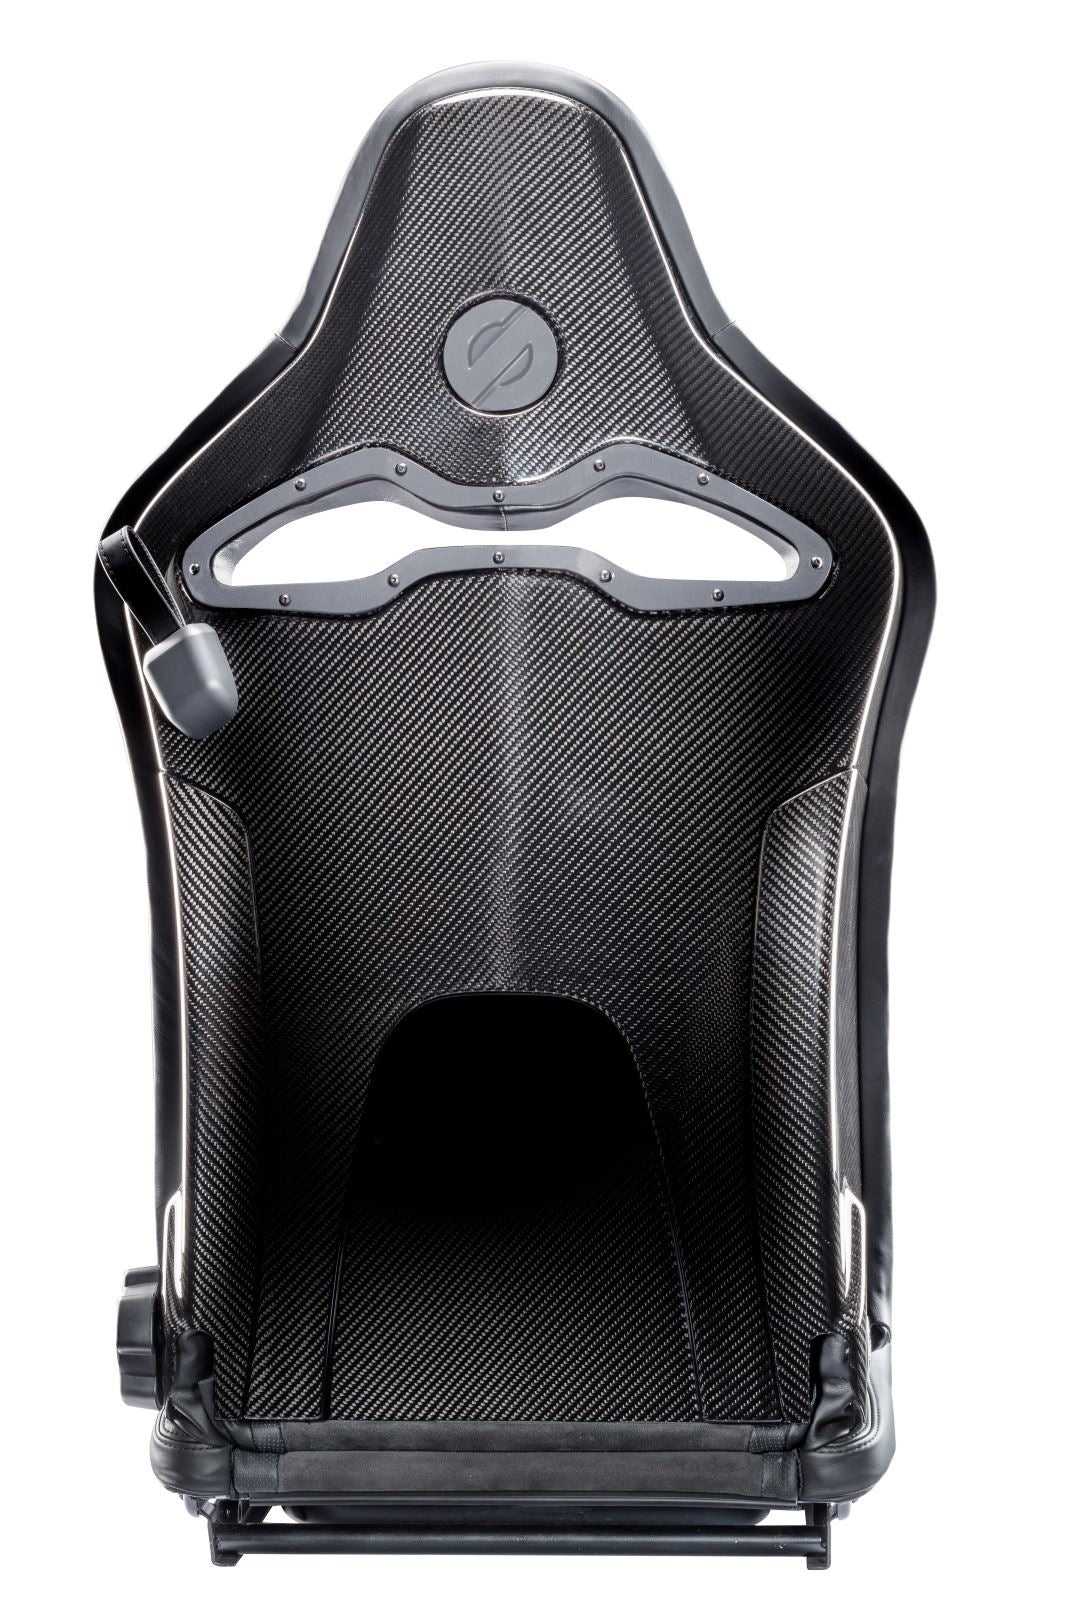 Sparco Seat SPX Leather/Alcantara Black - Left